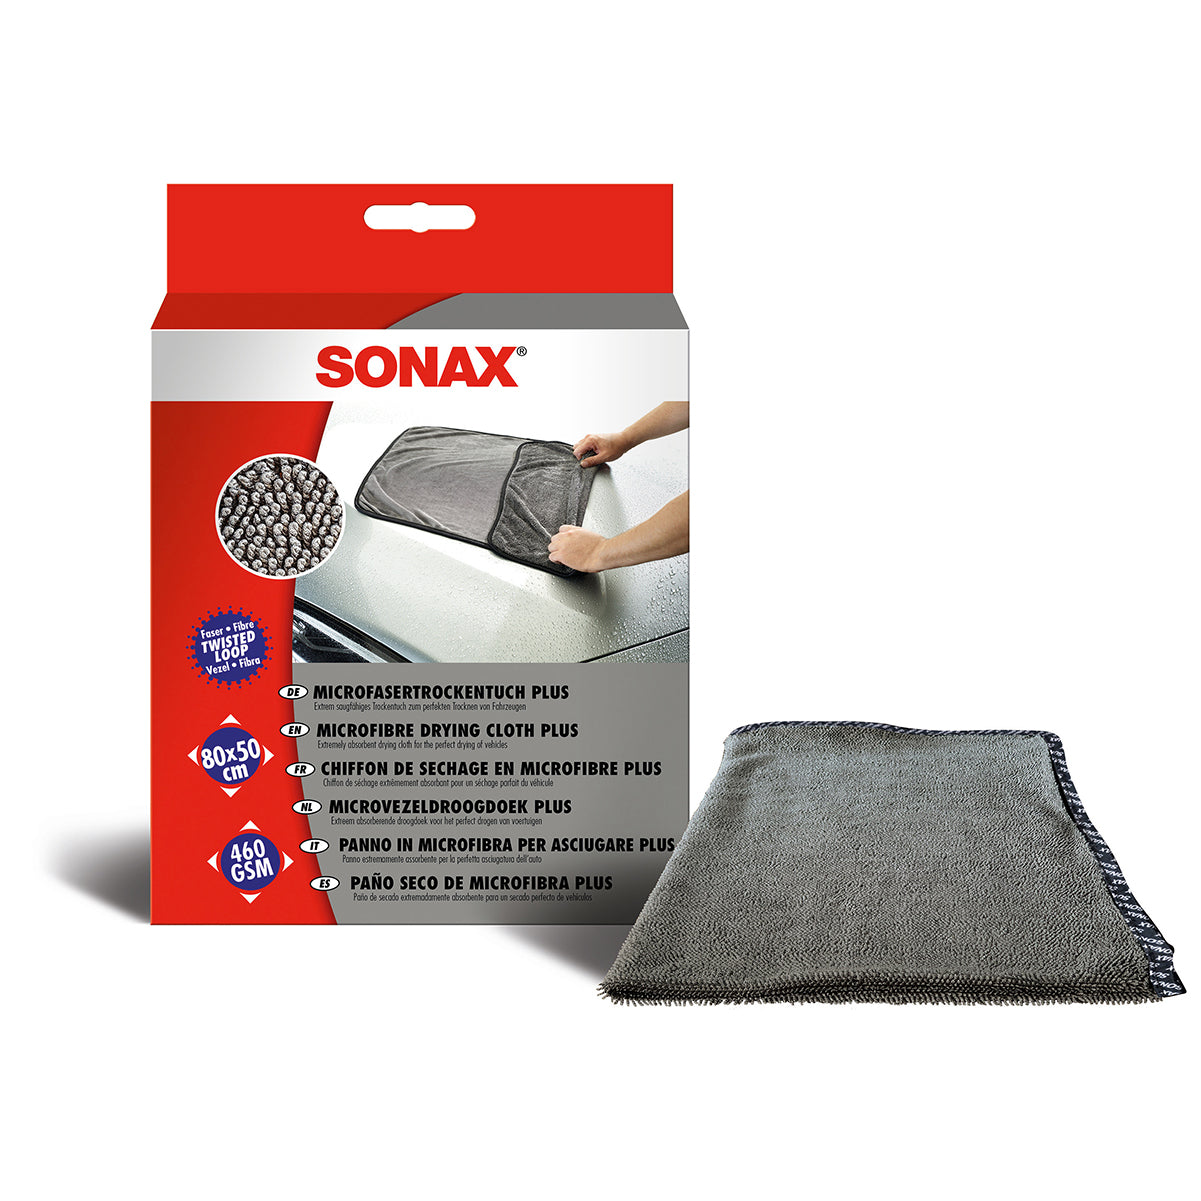 Sonax Microfiber Drying Cloth Plus